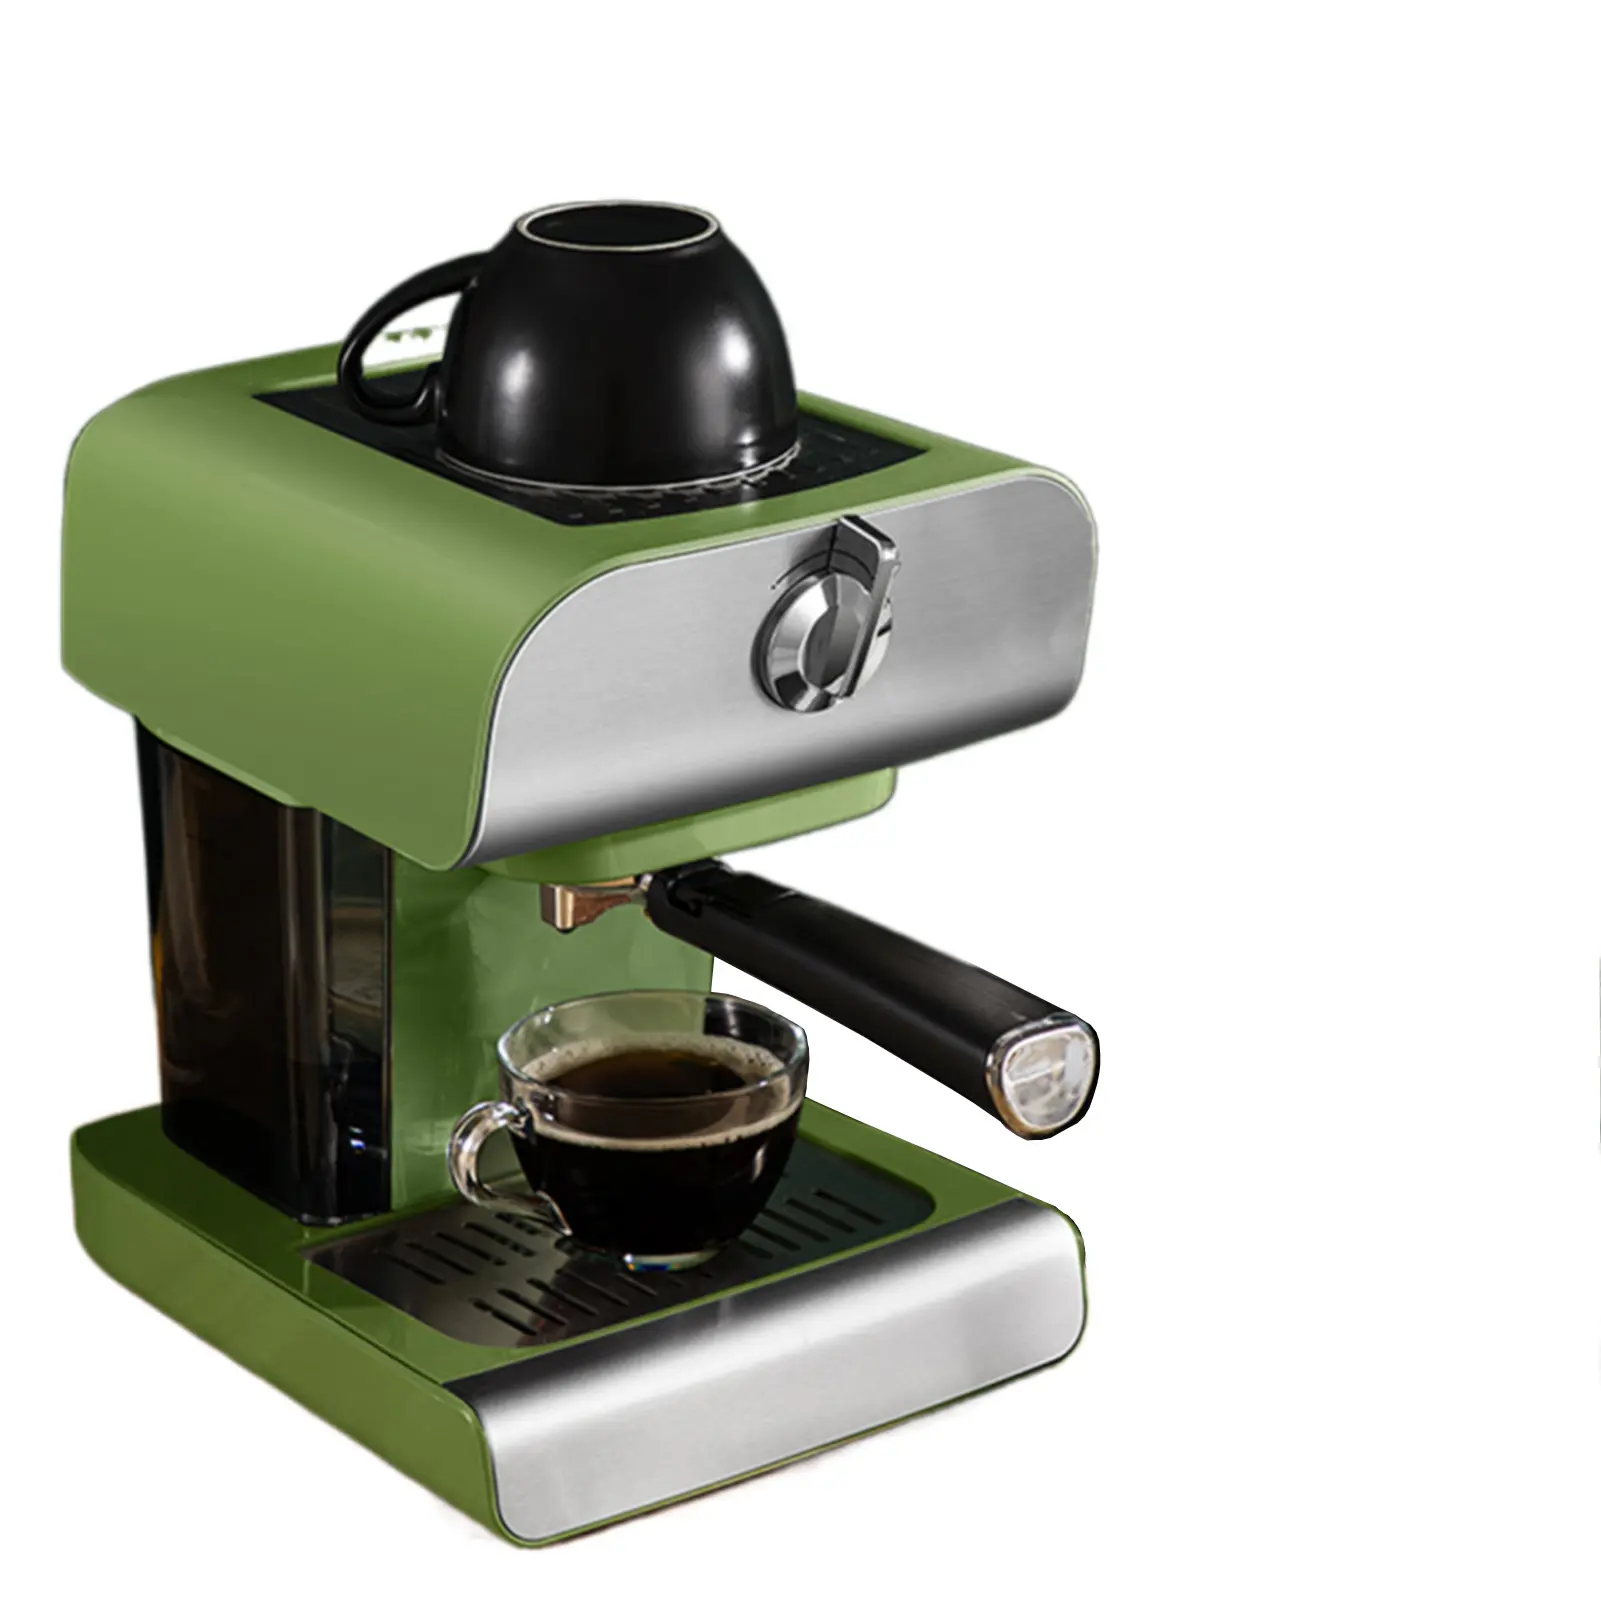 Tersedia stok tersedia tersedia baru mengonfirmasi baru roket Espresso mesin kopi Appartamento Espresso